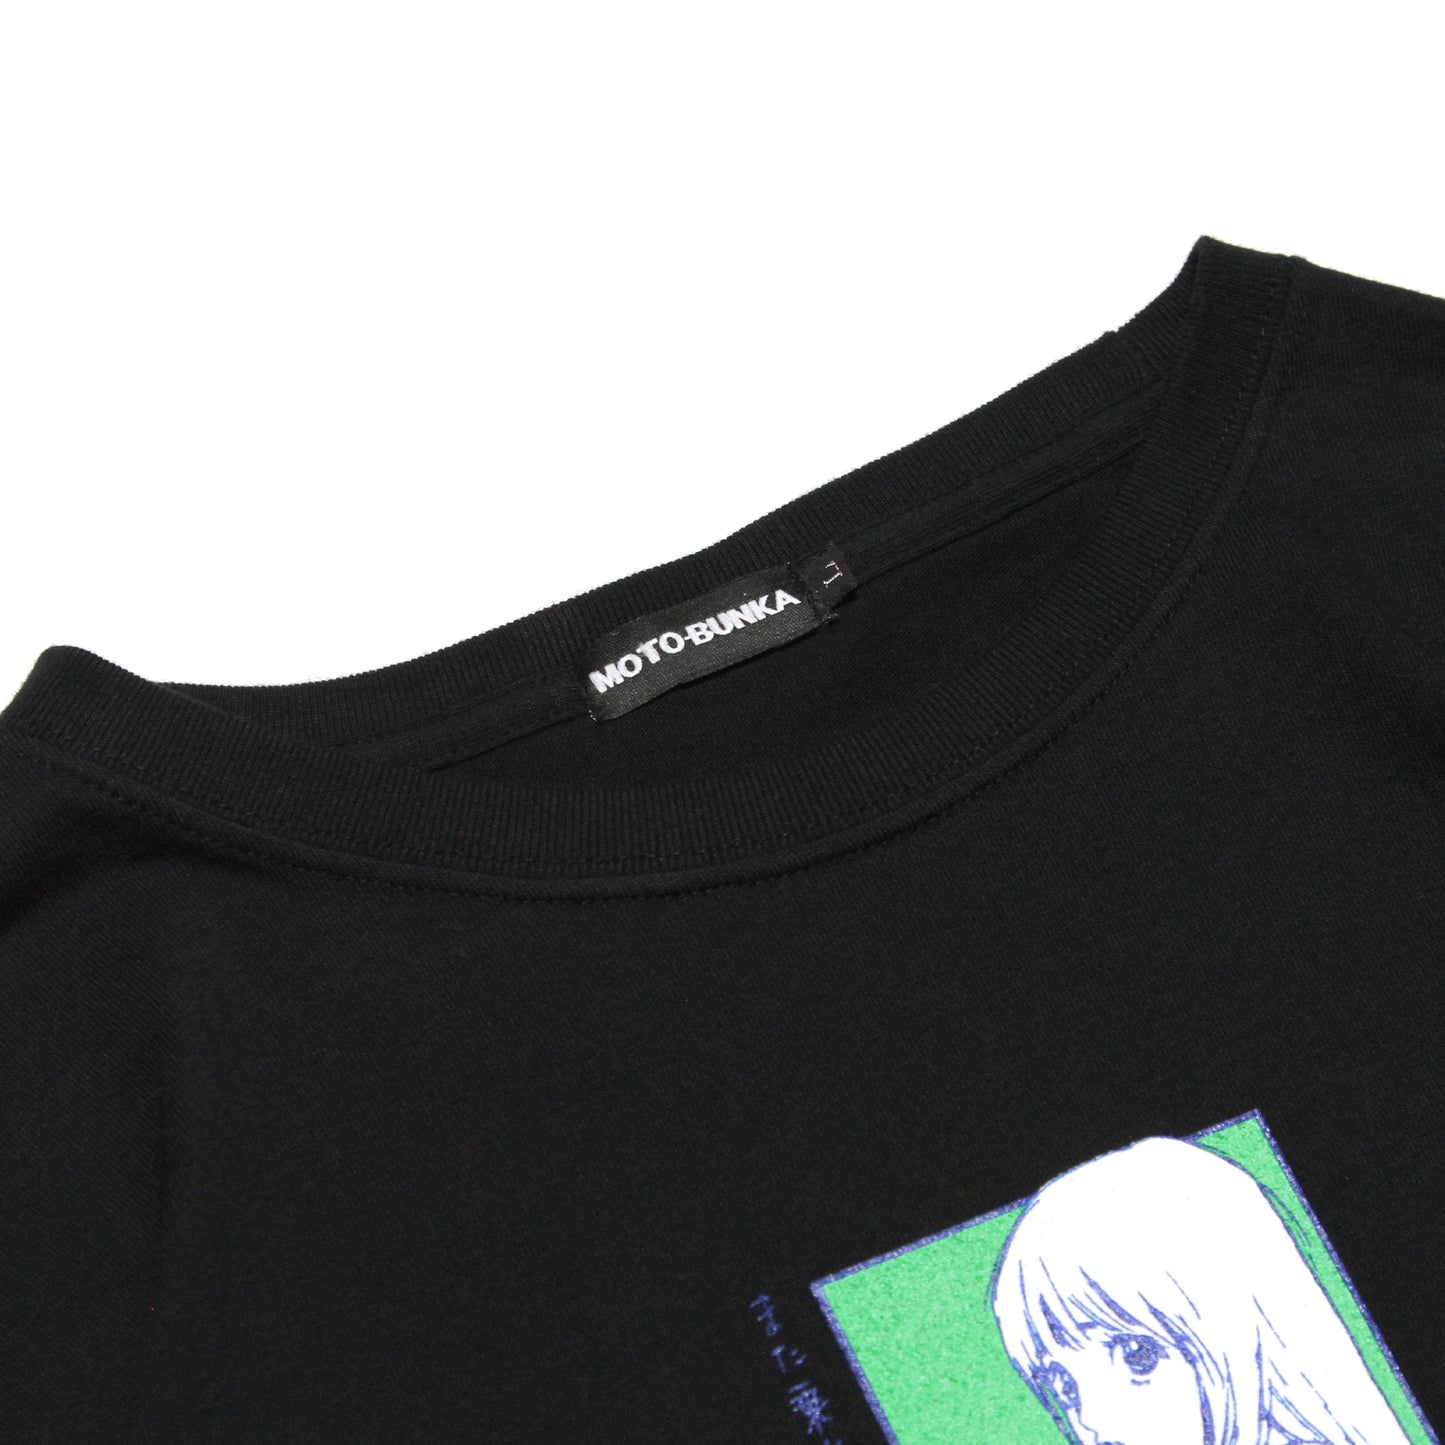 MOTO-BUNKA - MOE-BUNKA T-Shirt/Black